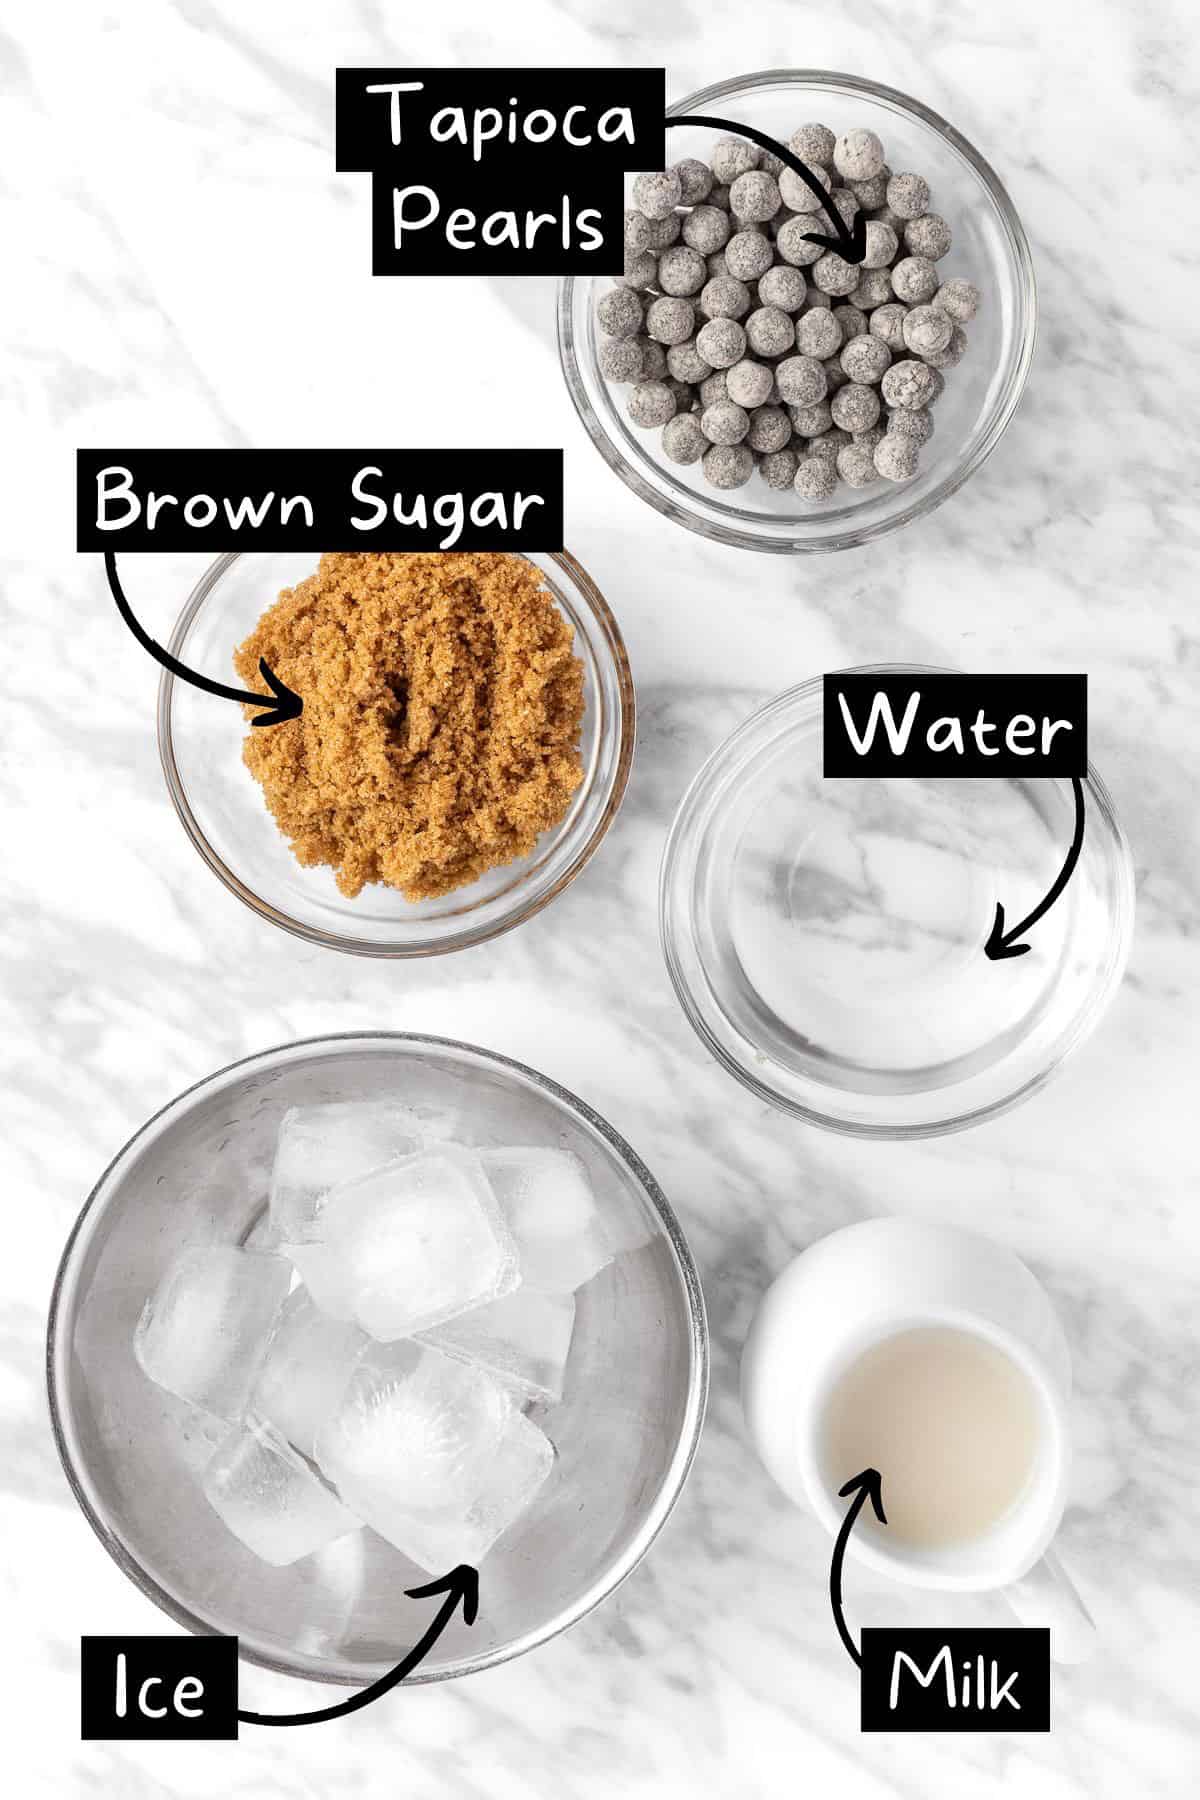 The ingredients needed to make the brown sugar milk tea.